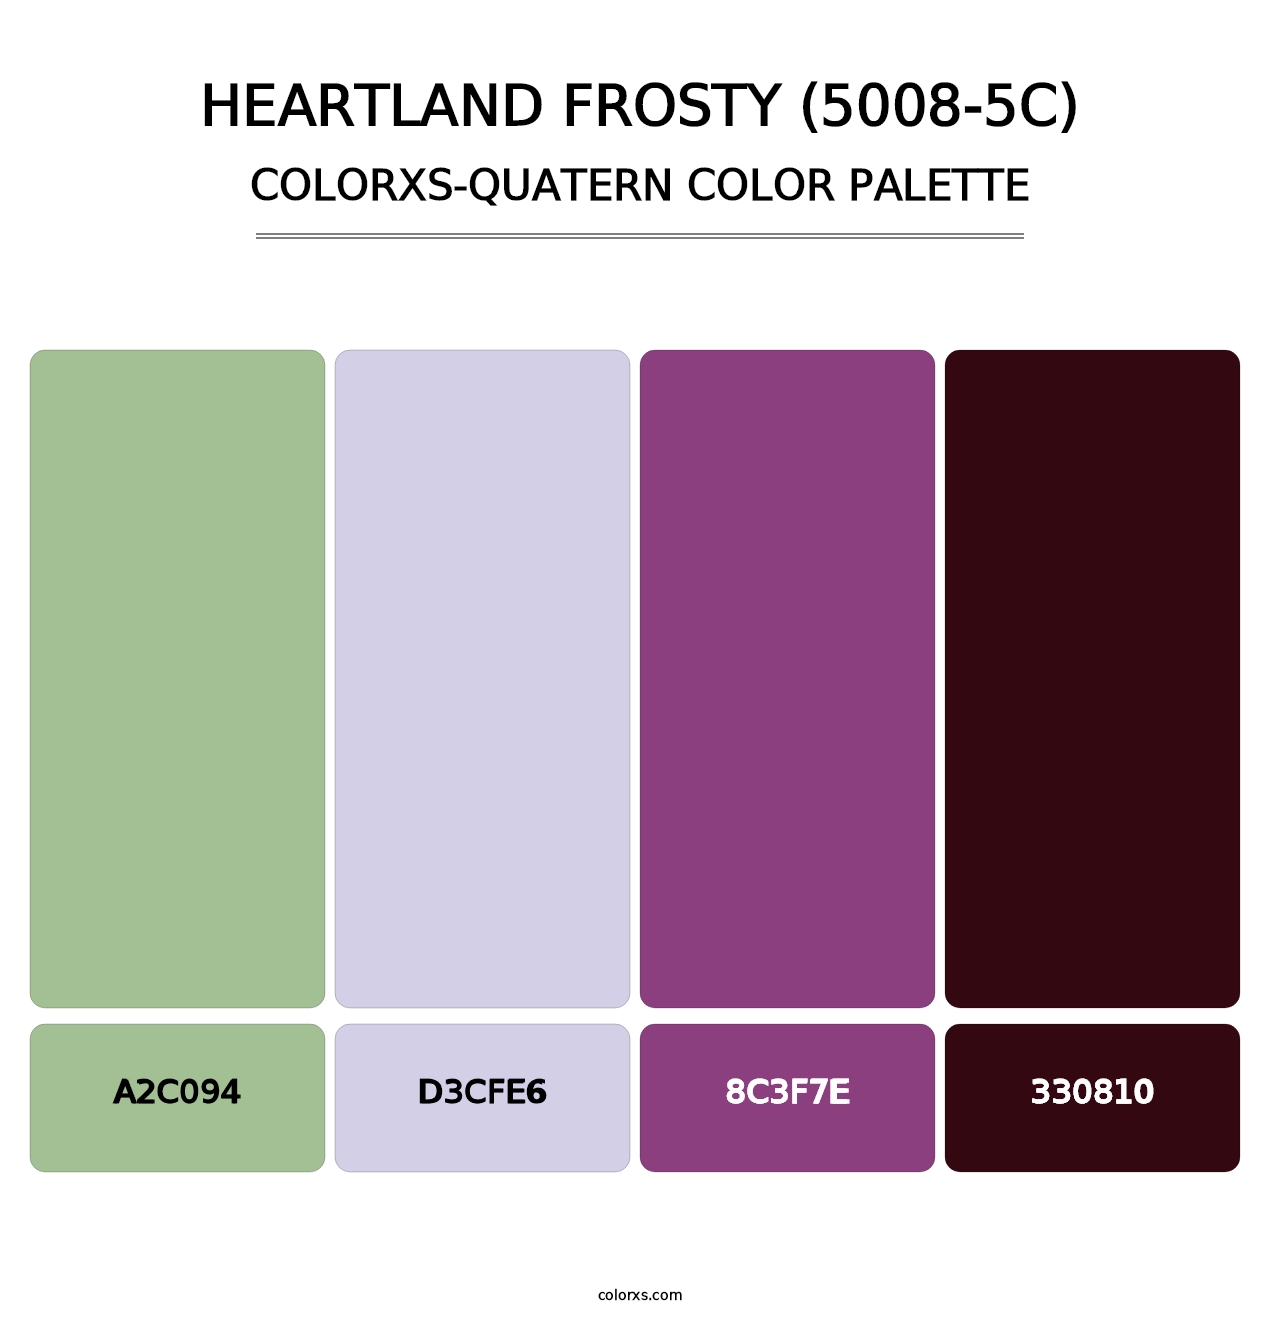 Heartland Frosty (5008-5C) - Colorxs Quatern Palette